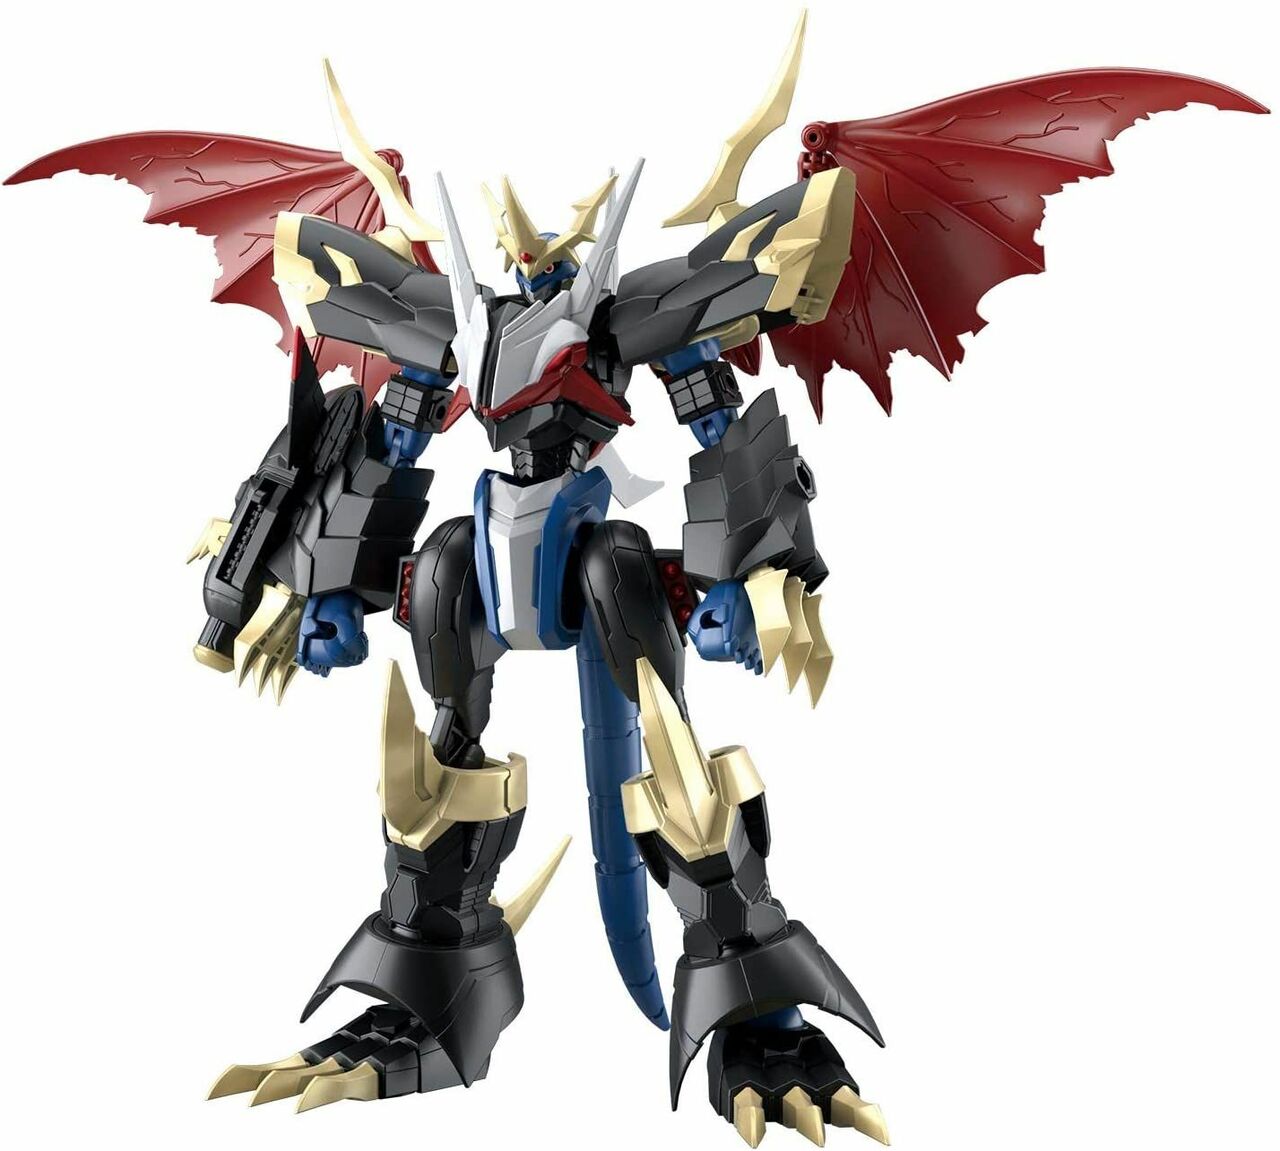 Digimon - Figure-rise Standard Amplified - Imperialdramon